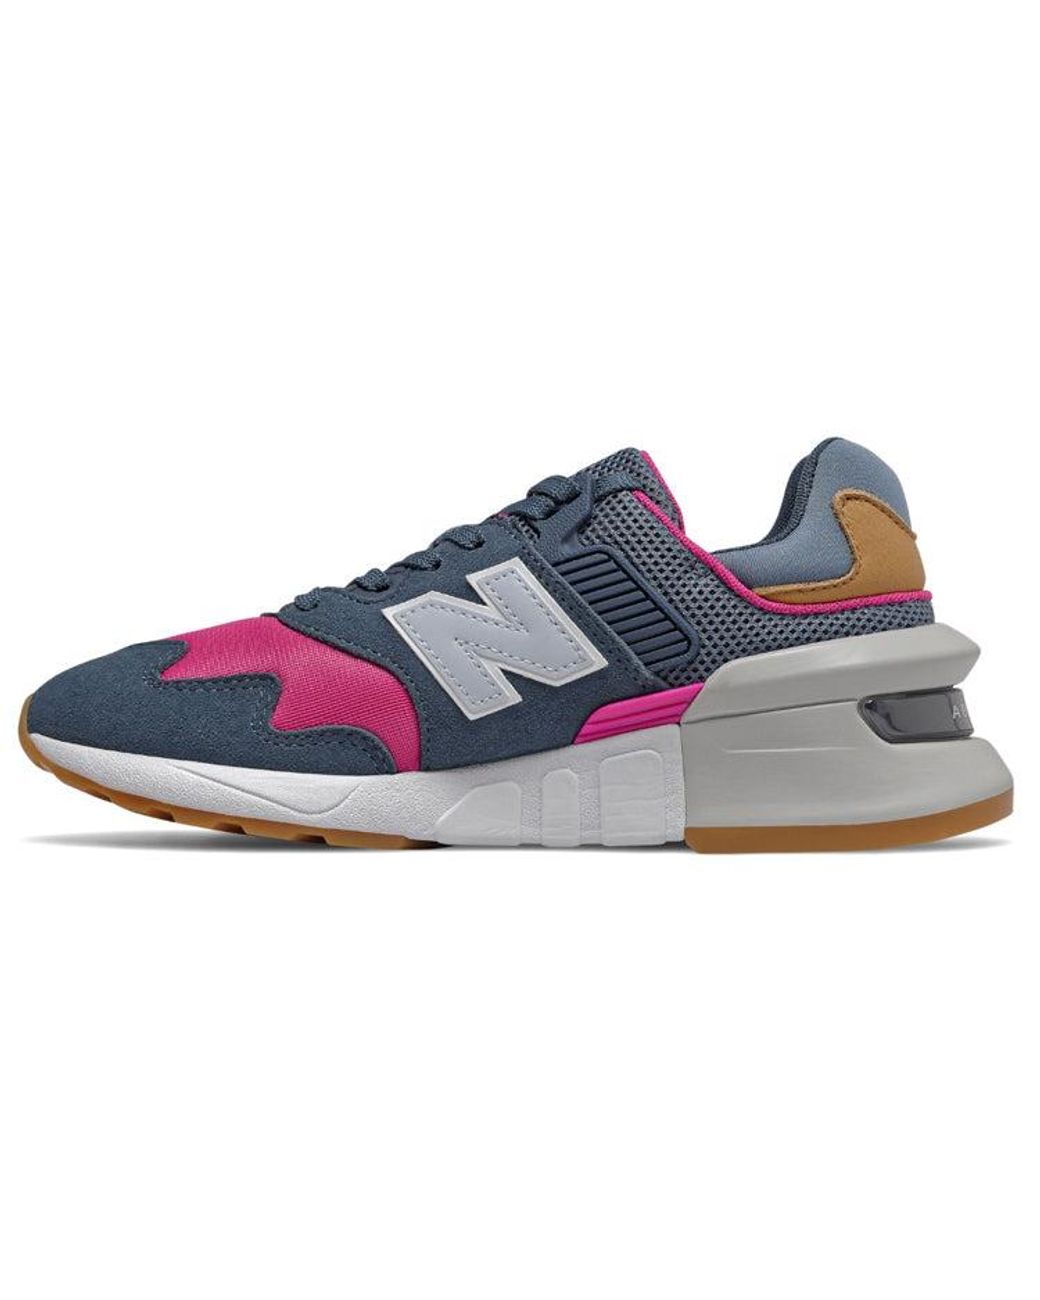 New Balance 997 Sport Blue/pink | Lyst